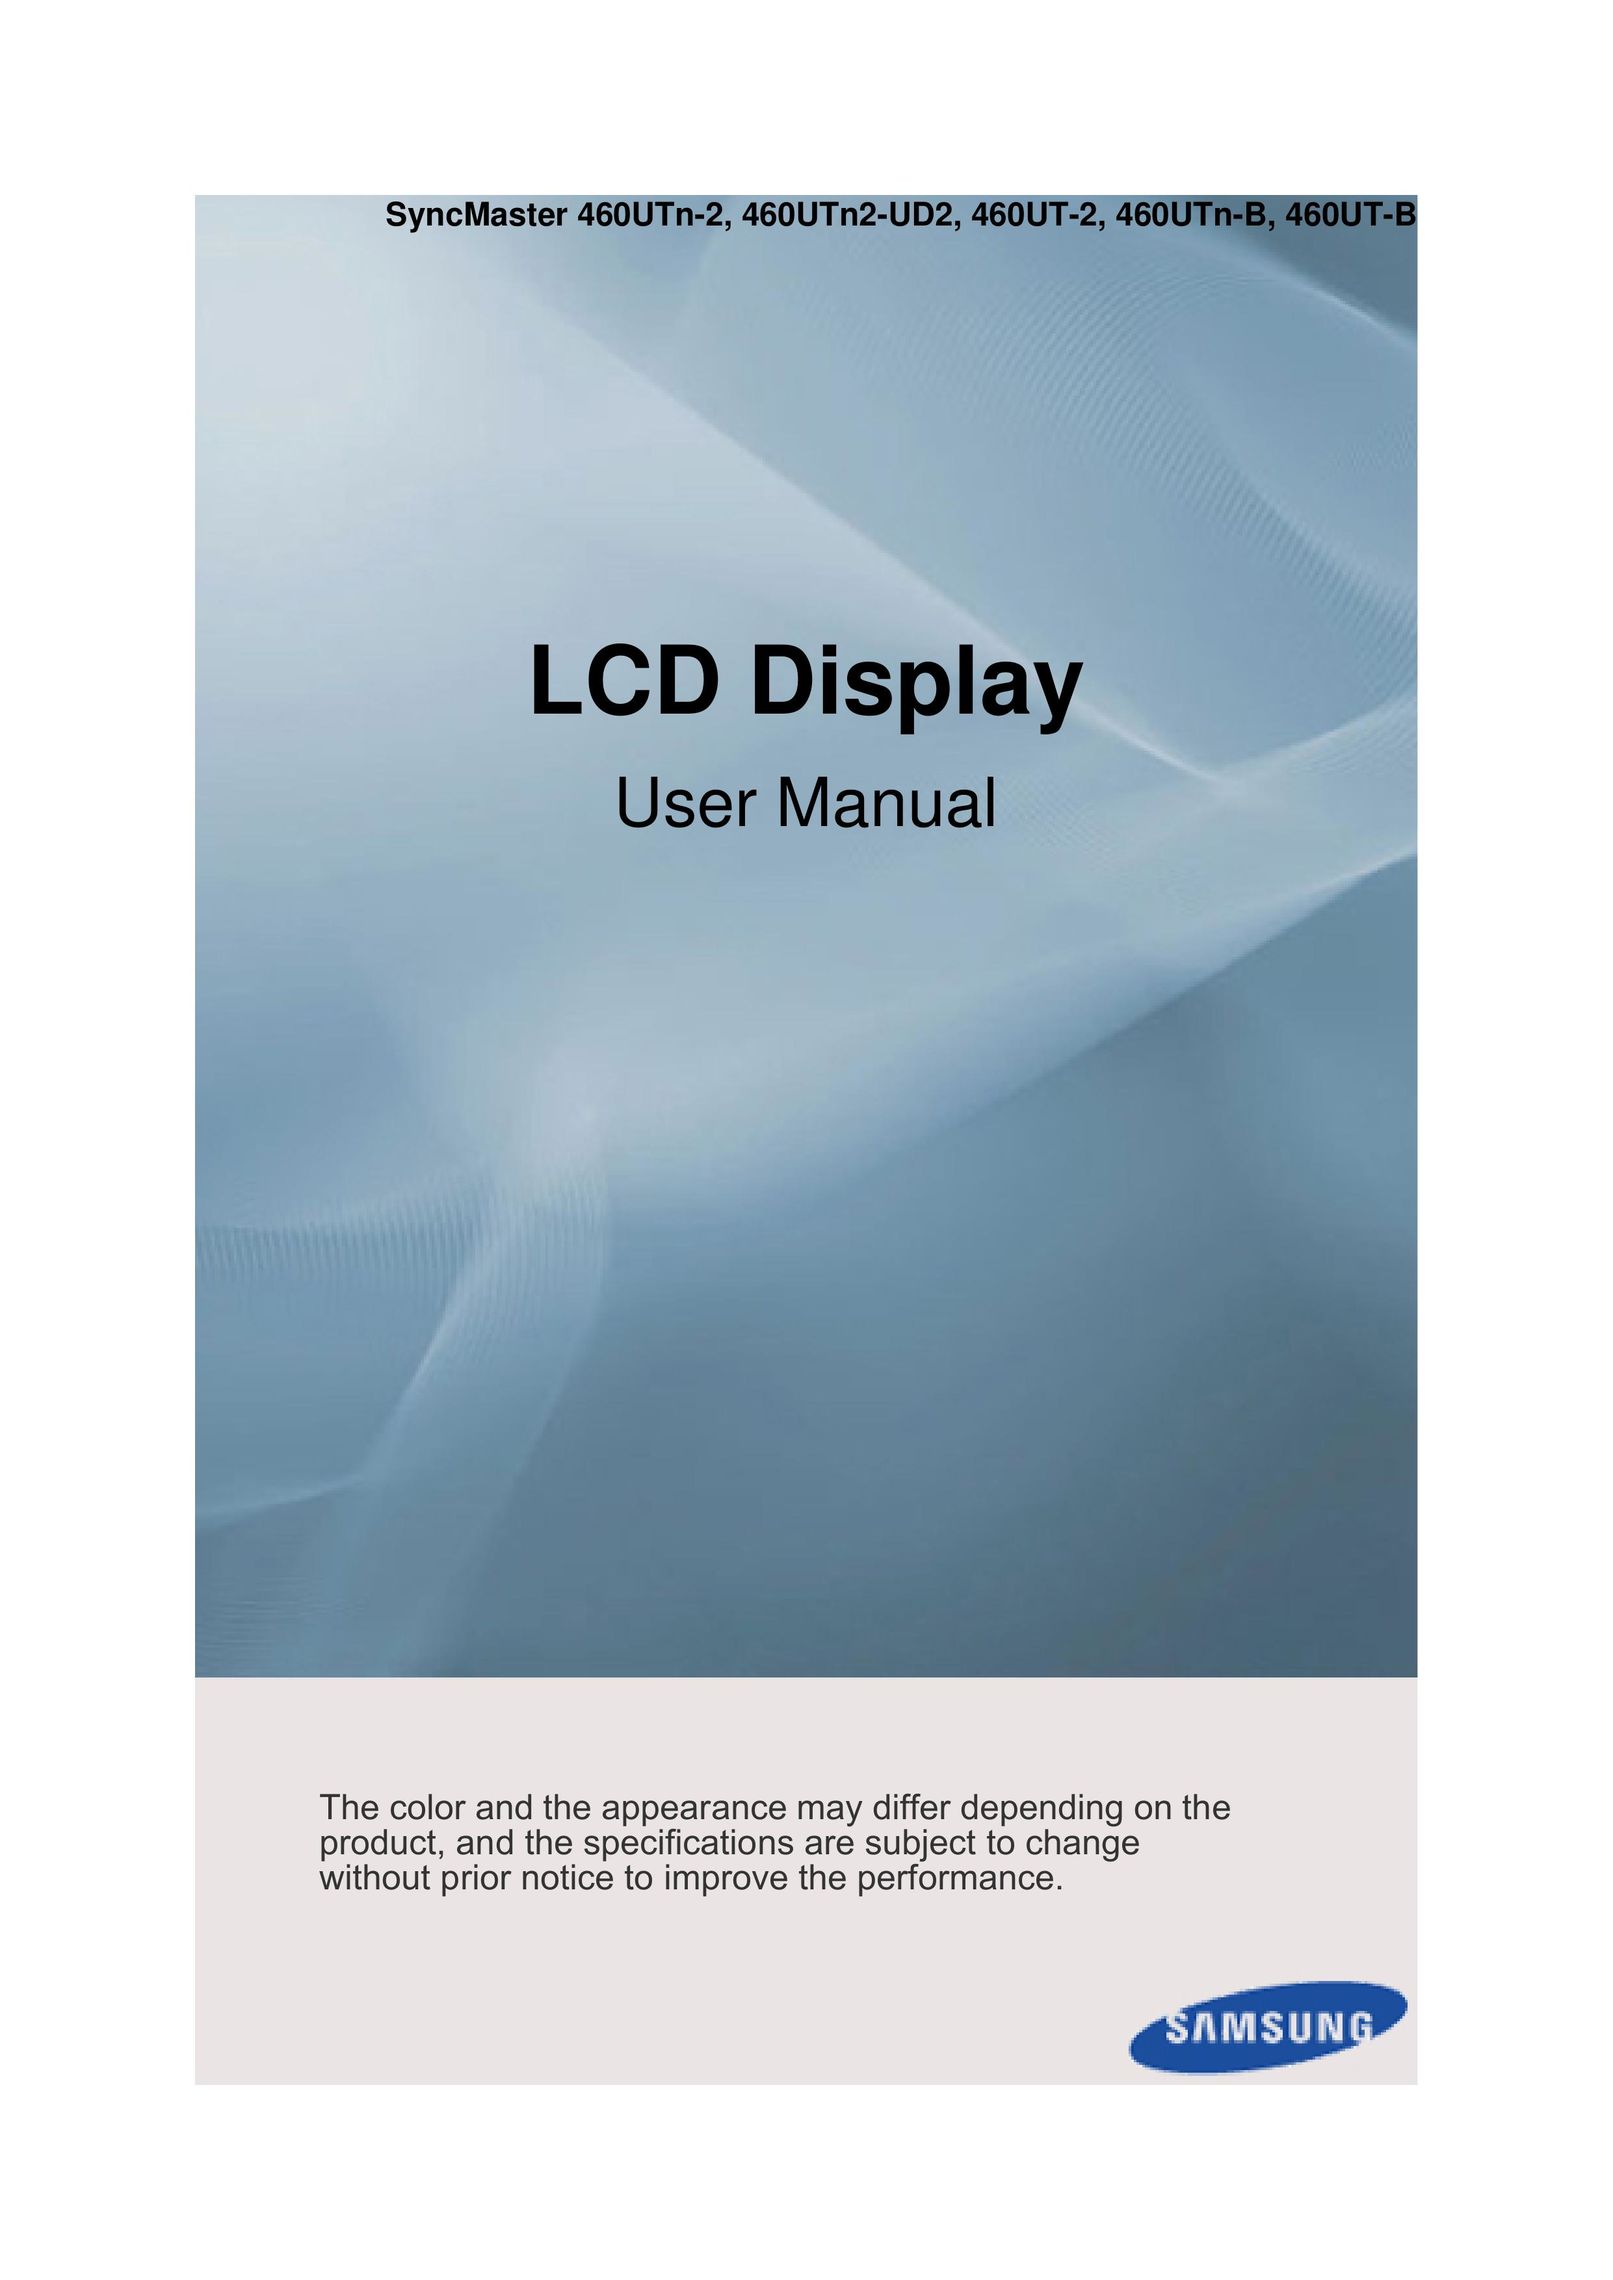 Samsung 460UT-B Car Video System User Manual